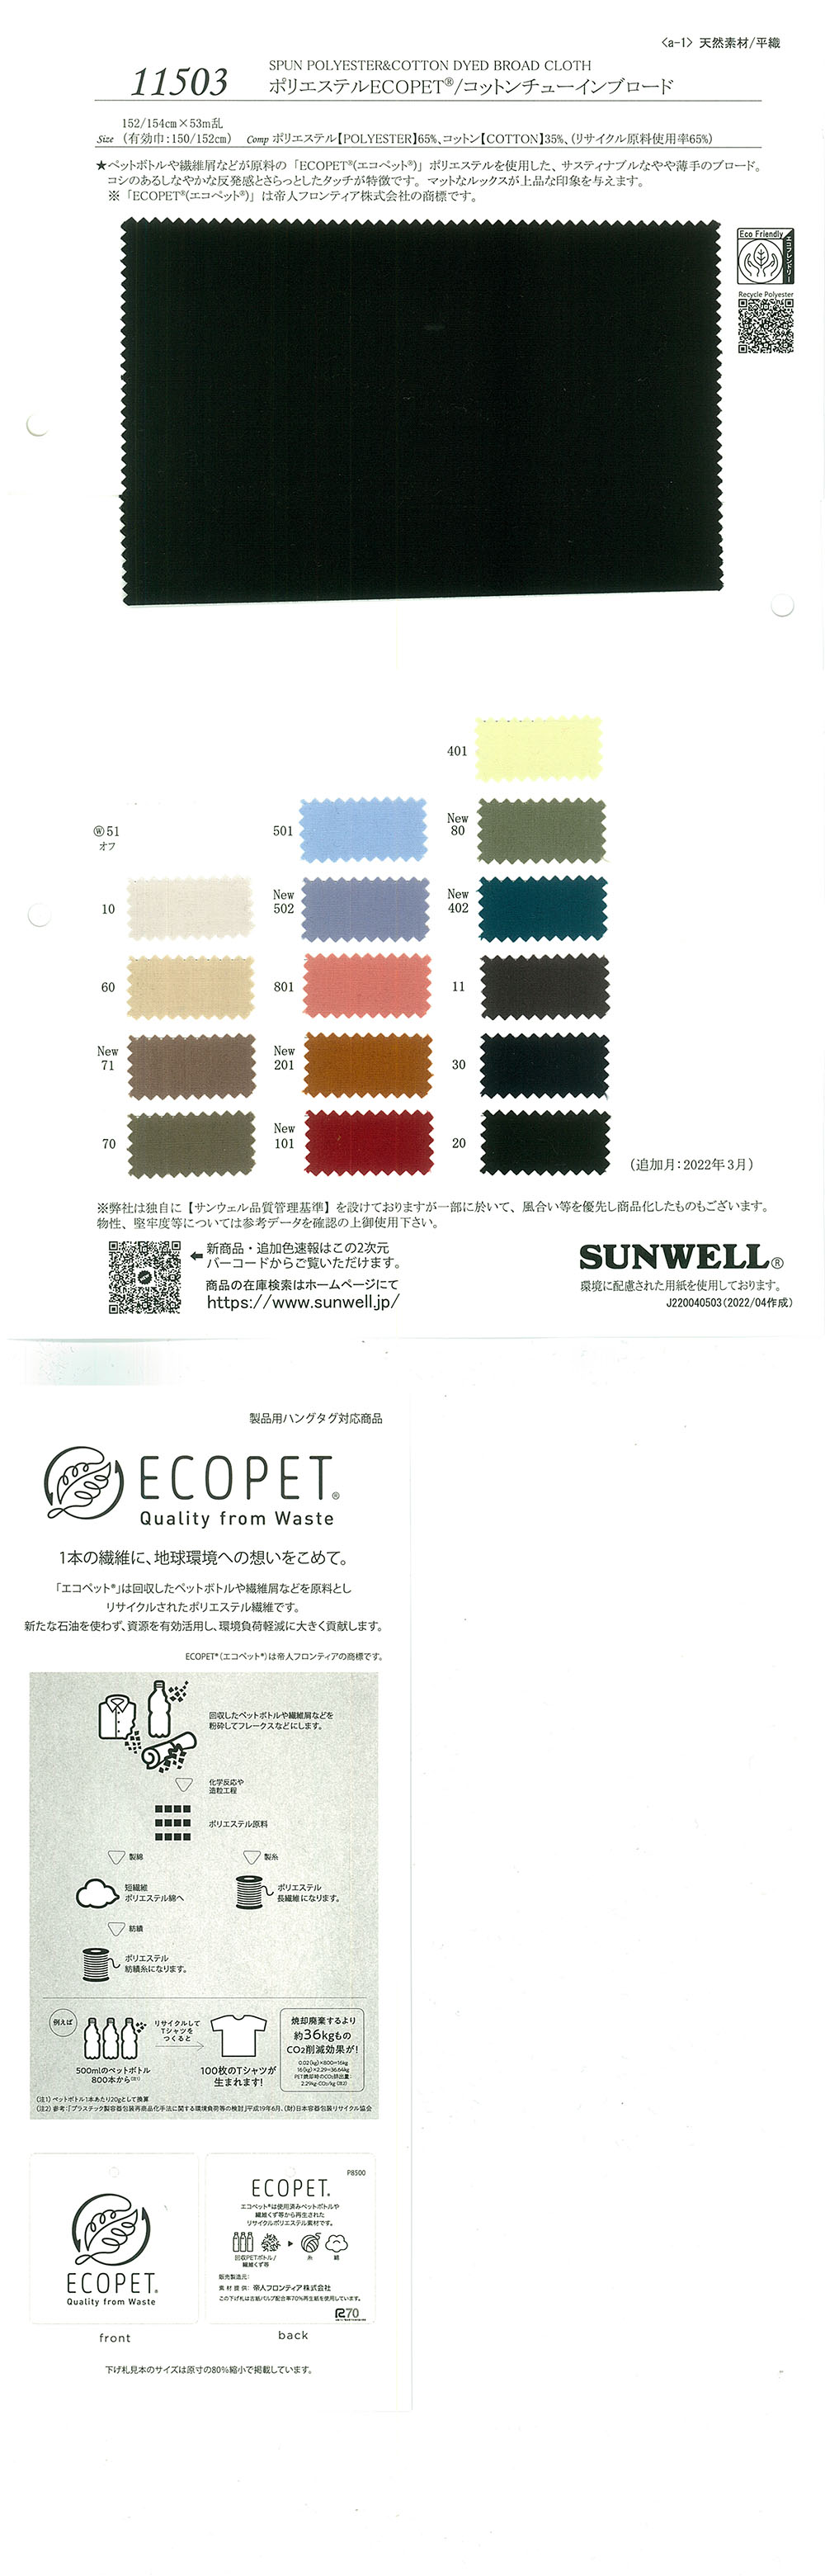 11503 Polyester ECOPET(R)/Coton Tuin Drap Fin[Fabrication De Textile] SUNWELL